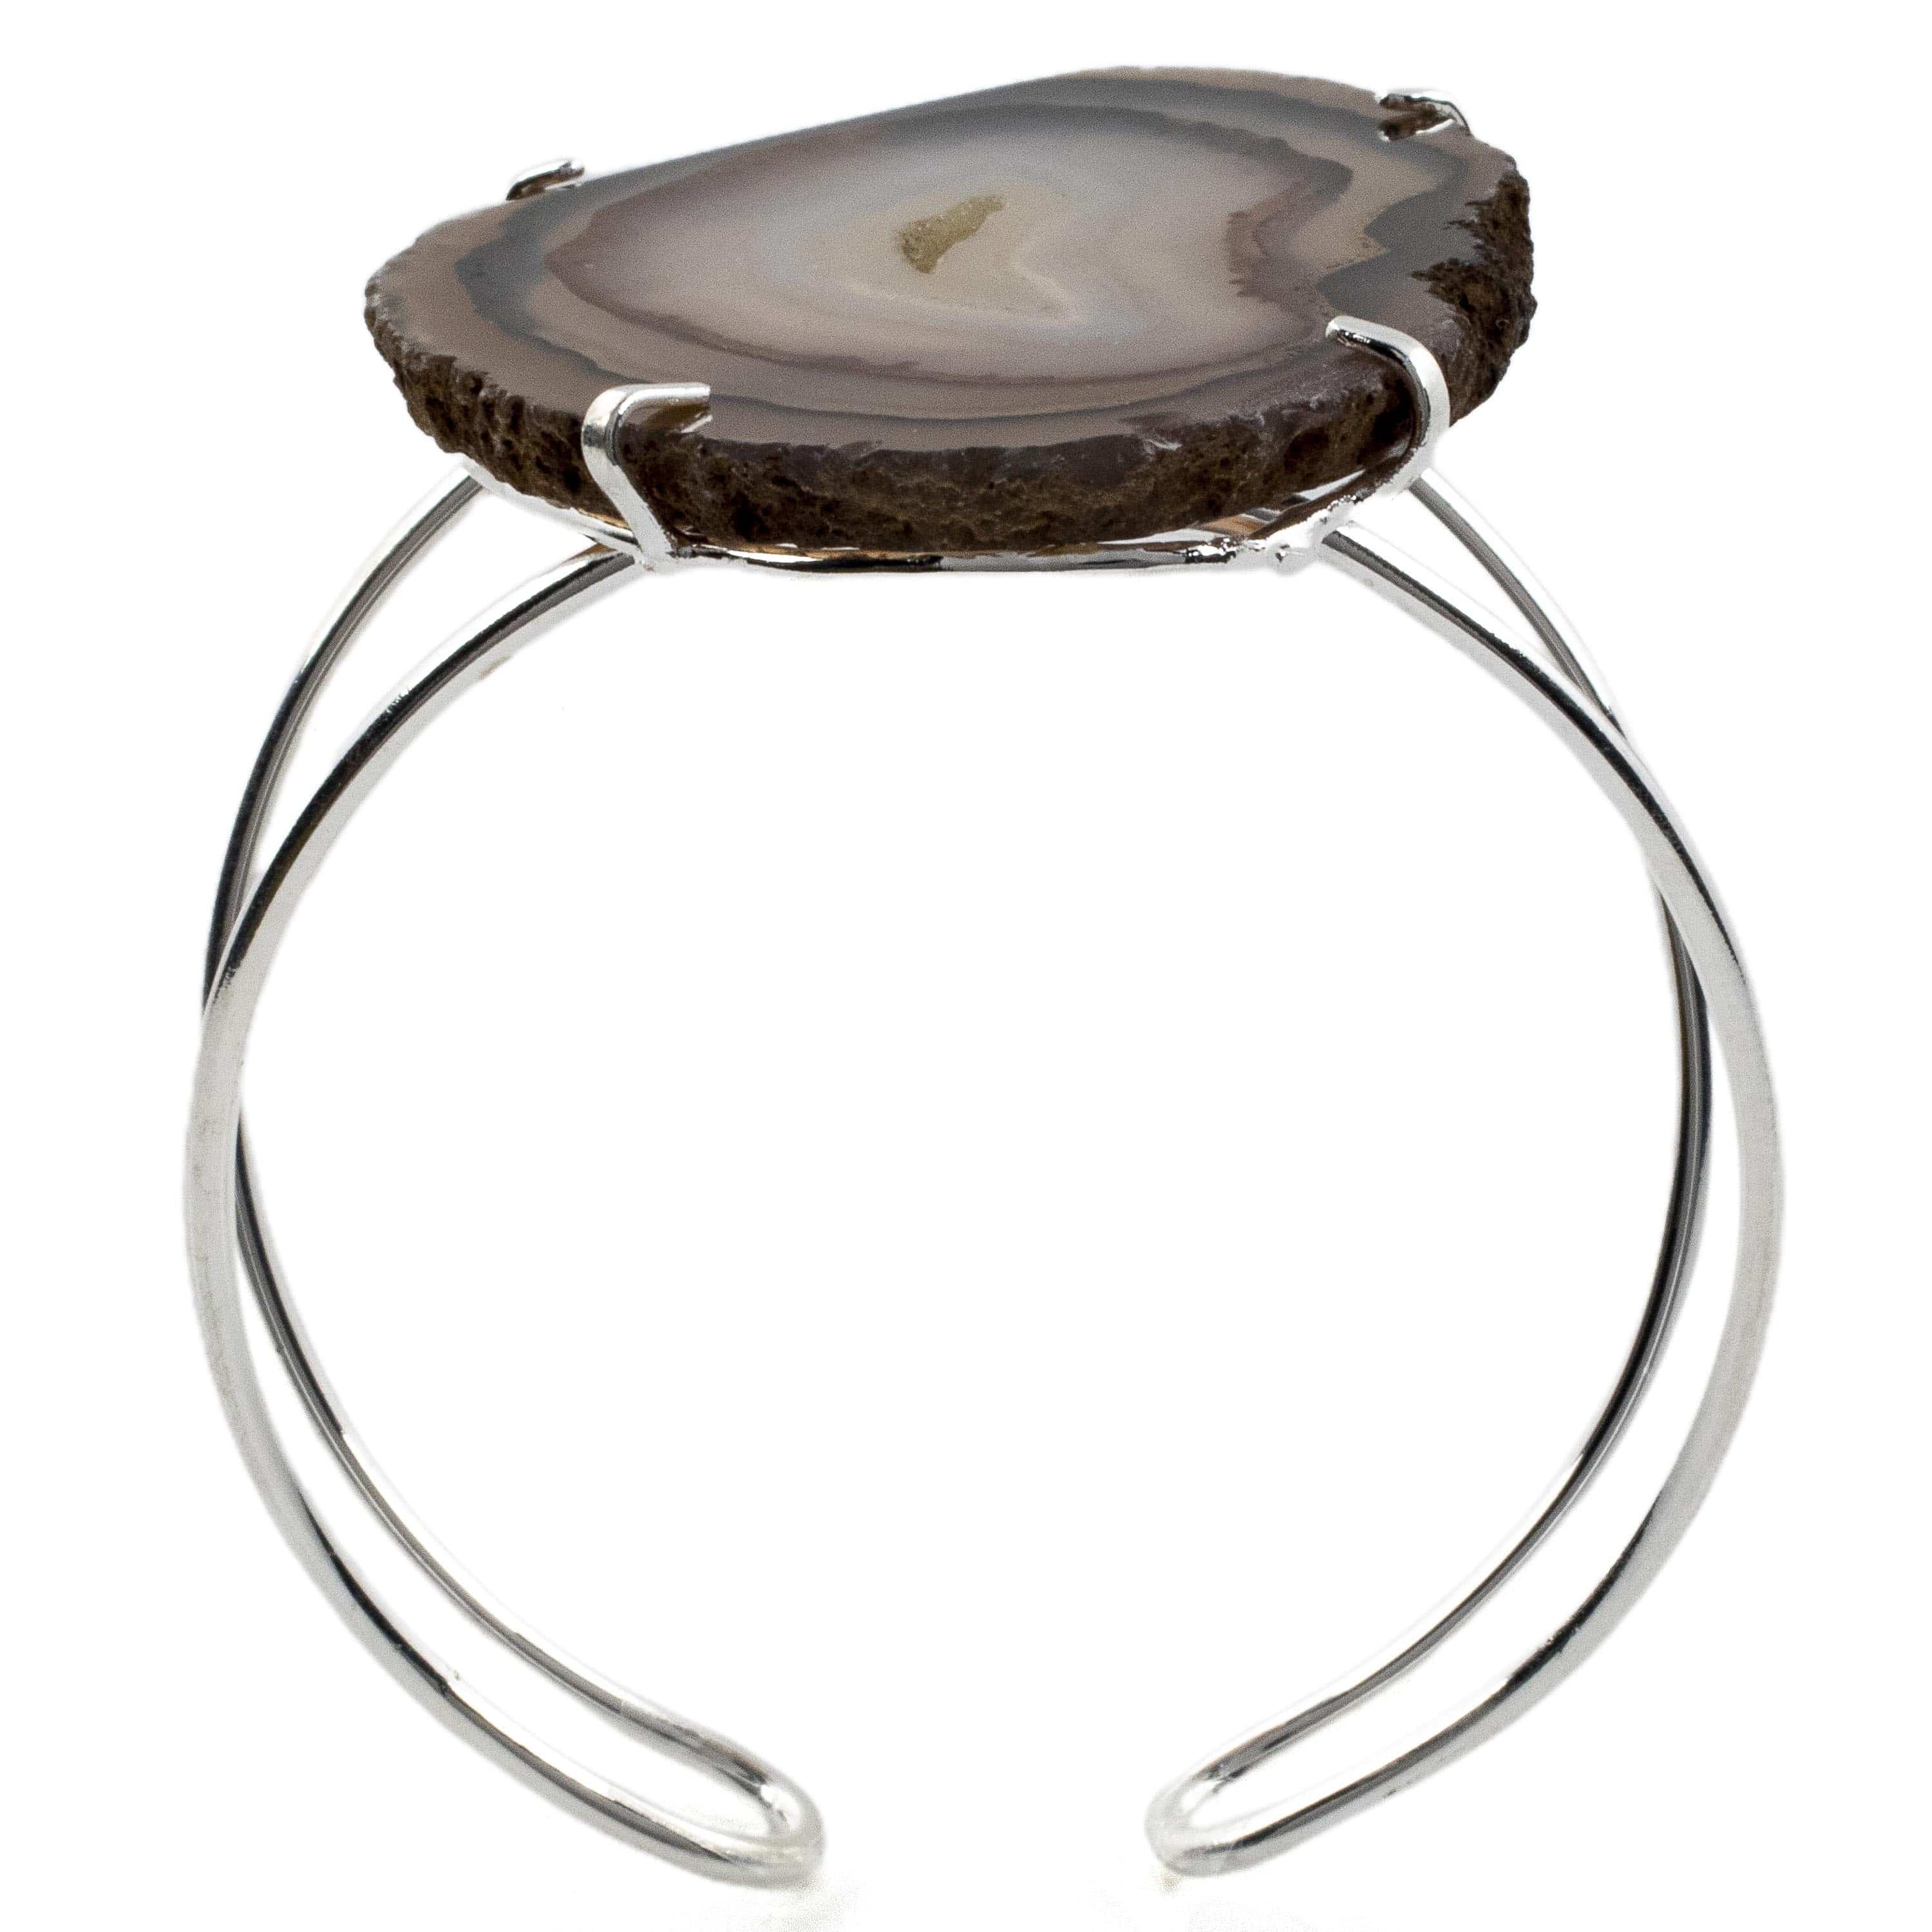 Kalifano Crystal Jewelry Natural Agate Cuff Bracelet CJB-1009-AG